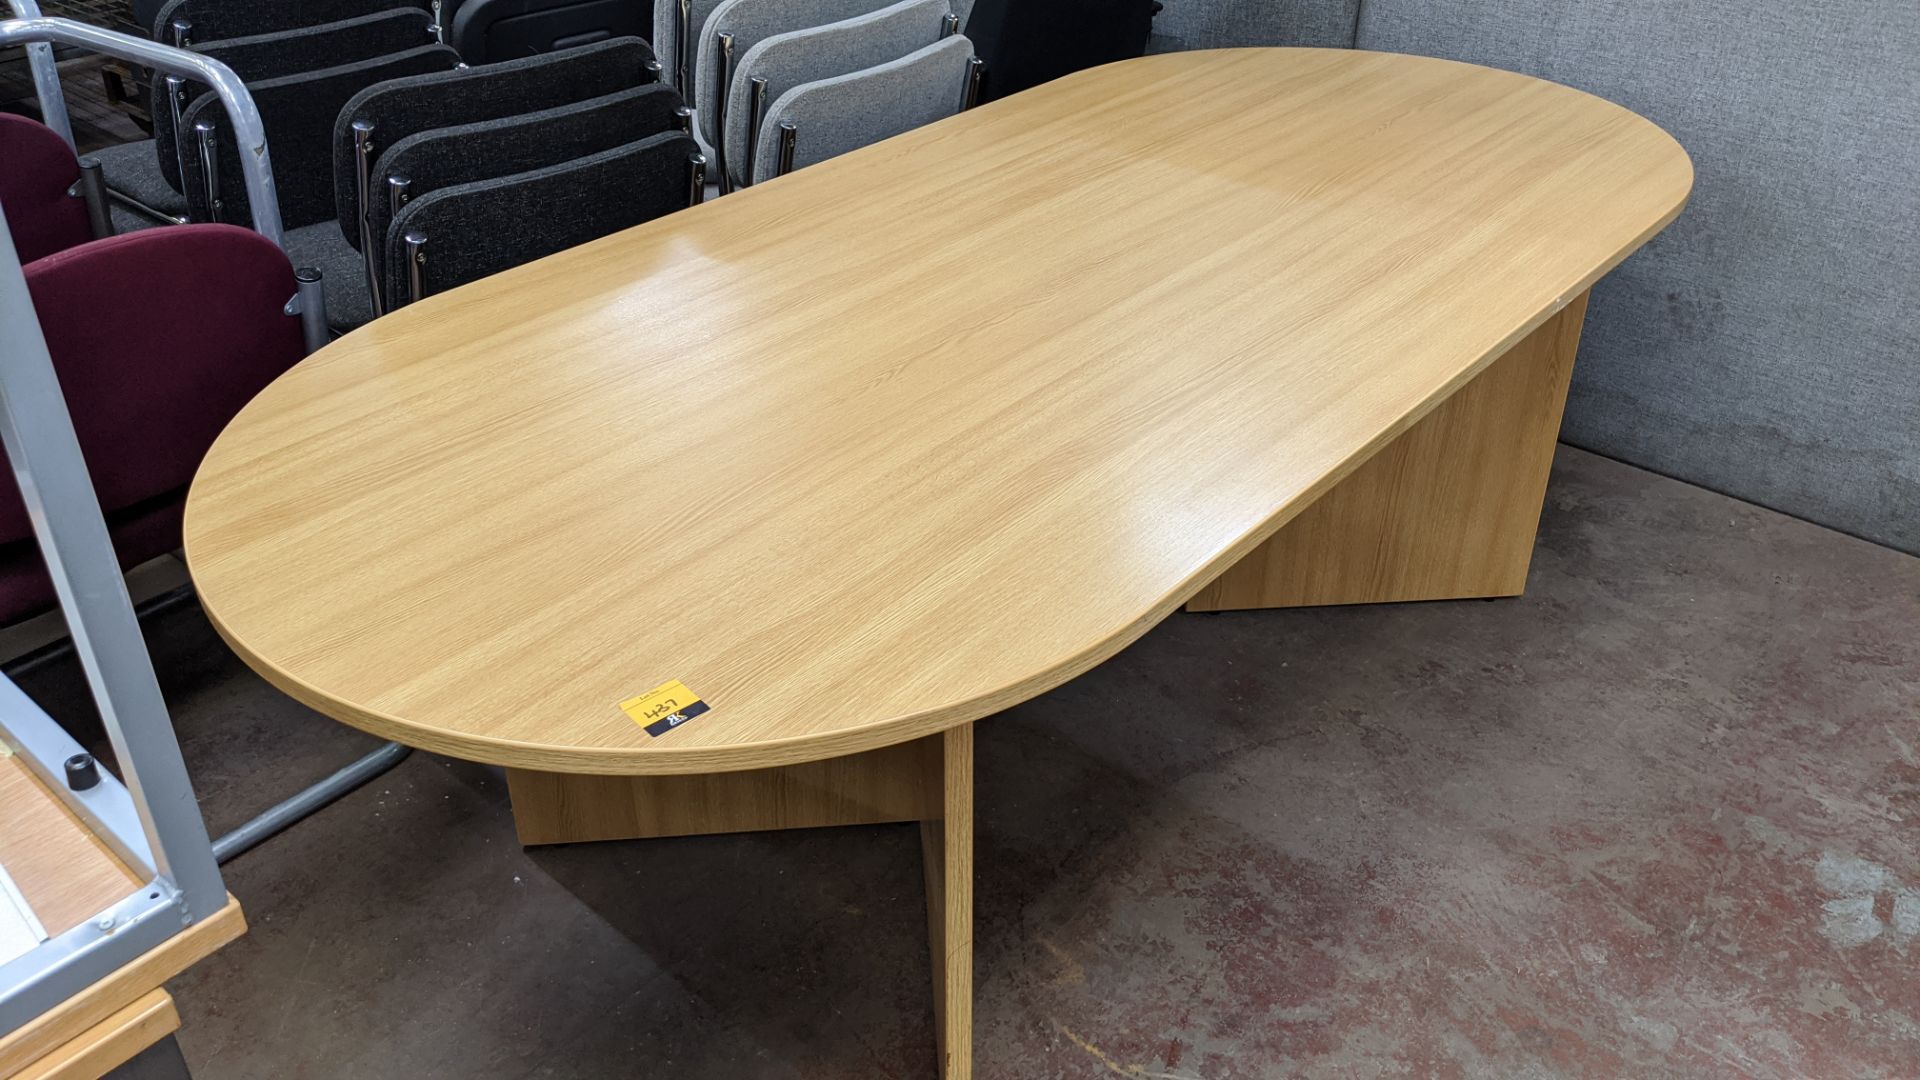 Light oak oval meeting table, measuring approx. 2200mm x 1000mm x 720mm